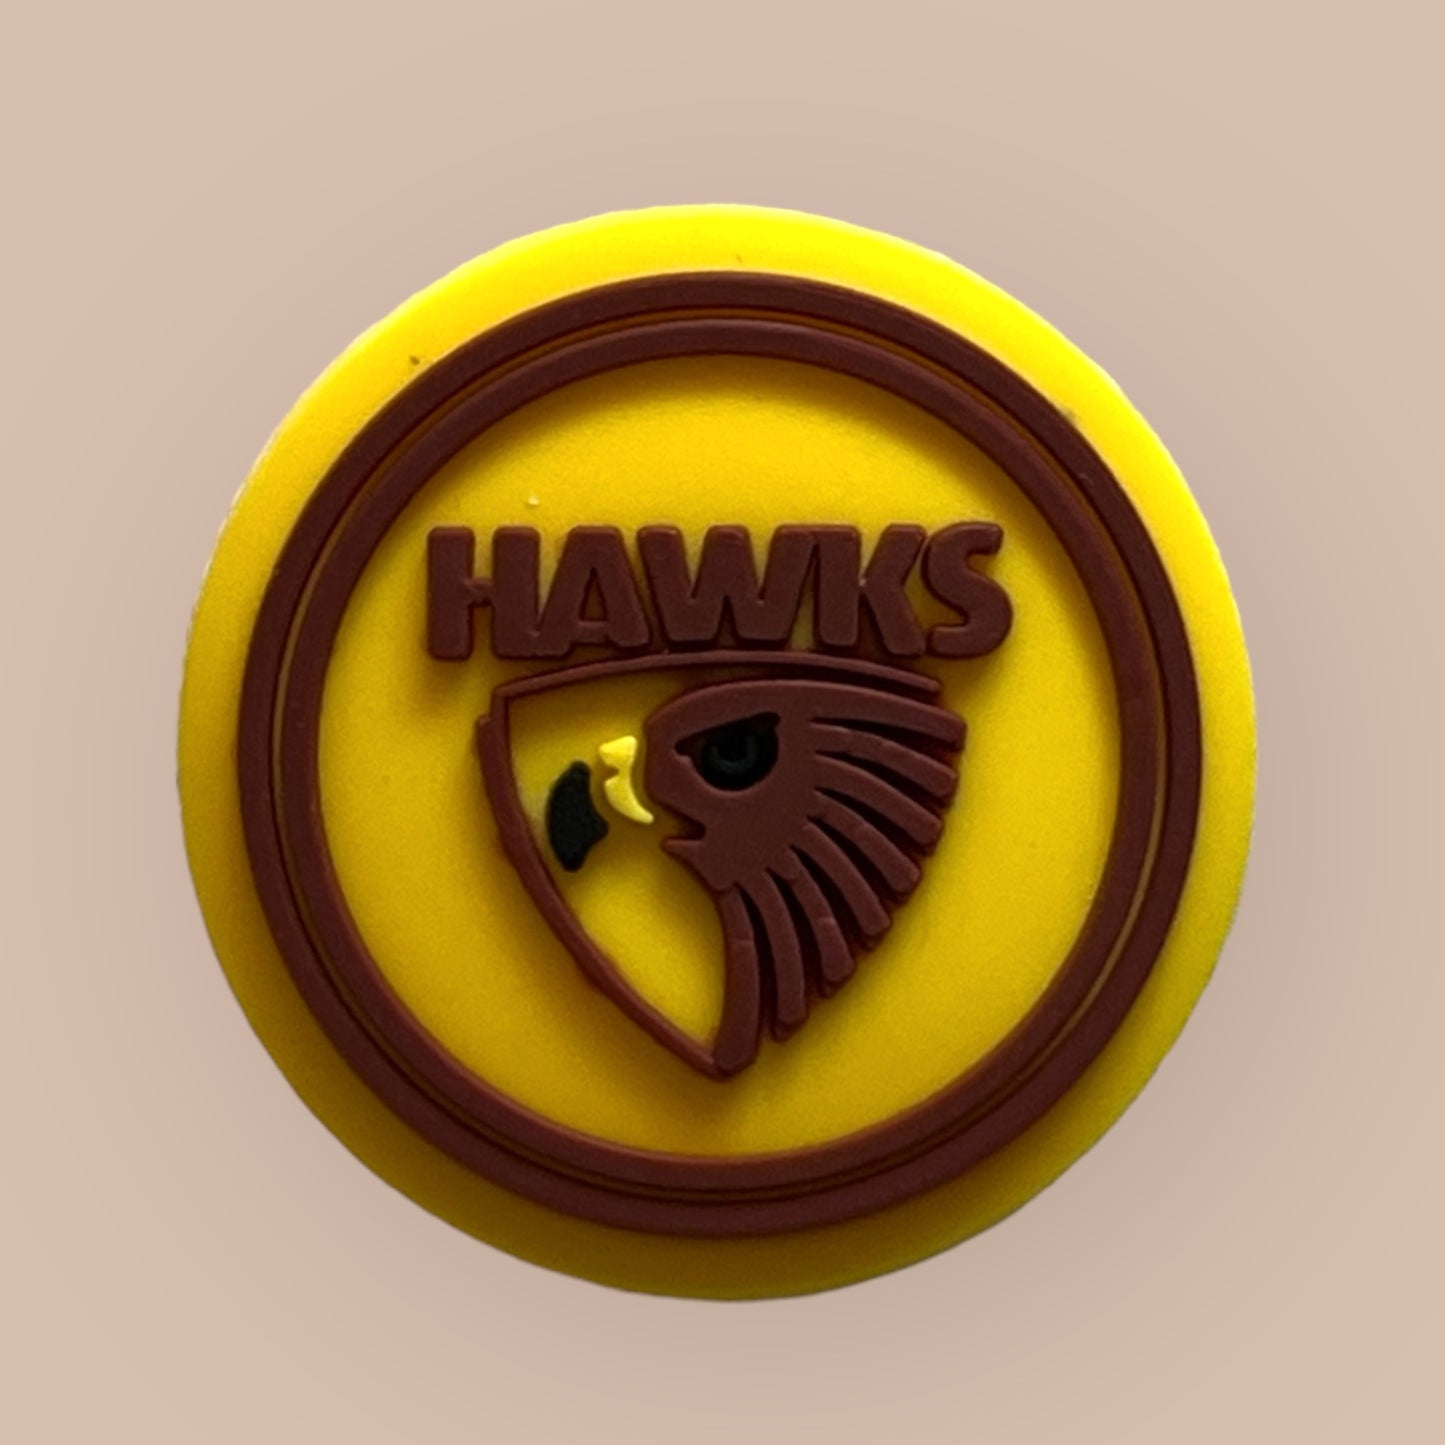 AFL Hawks